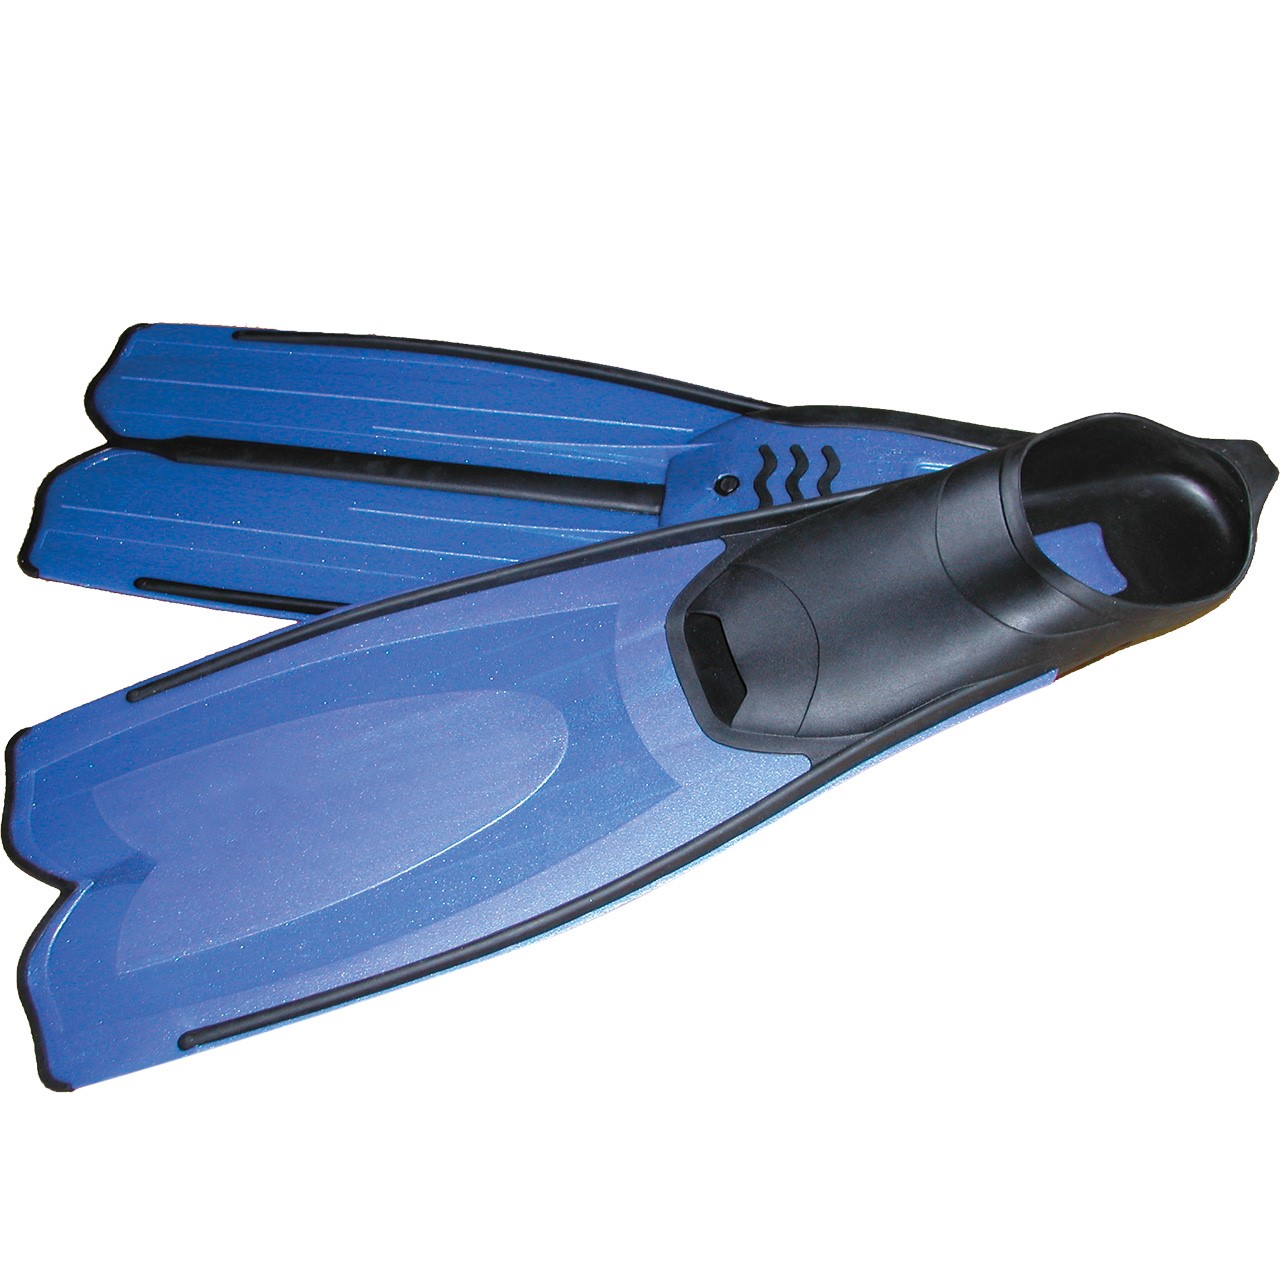 Tunturi Diving Fins "Flipper" Size 36-37 Blue